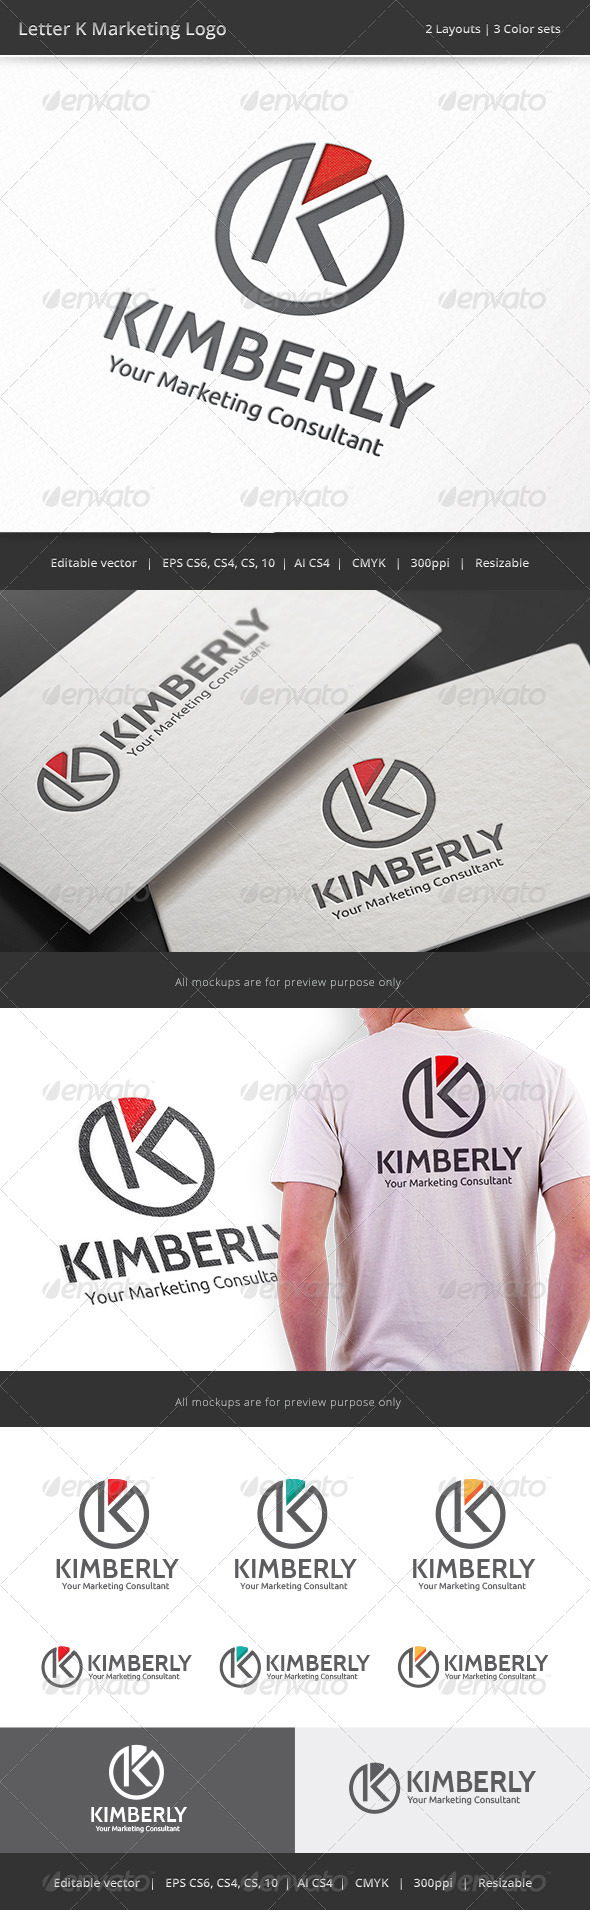 Kimberly Marketing Letter K Logo